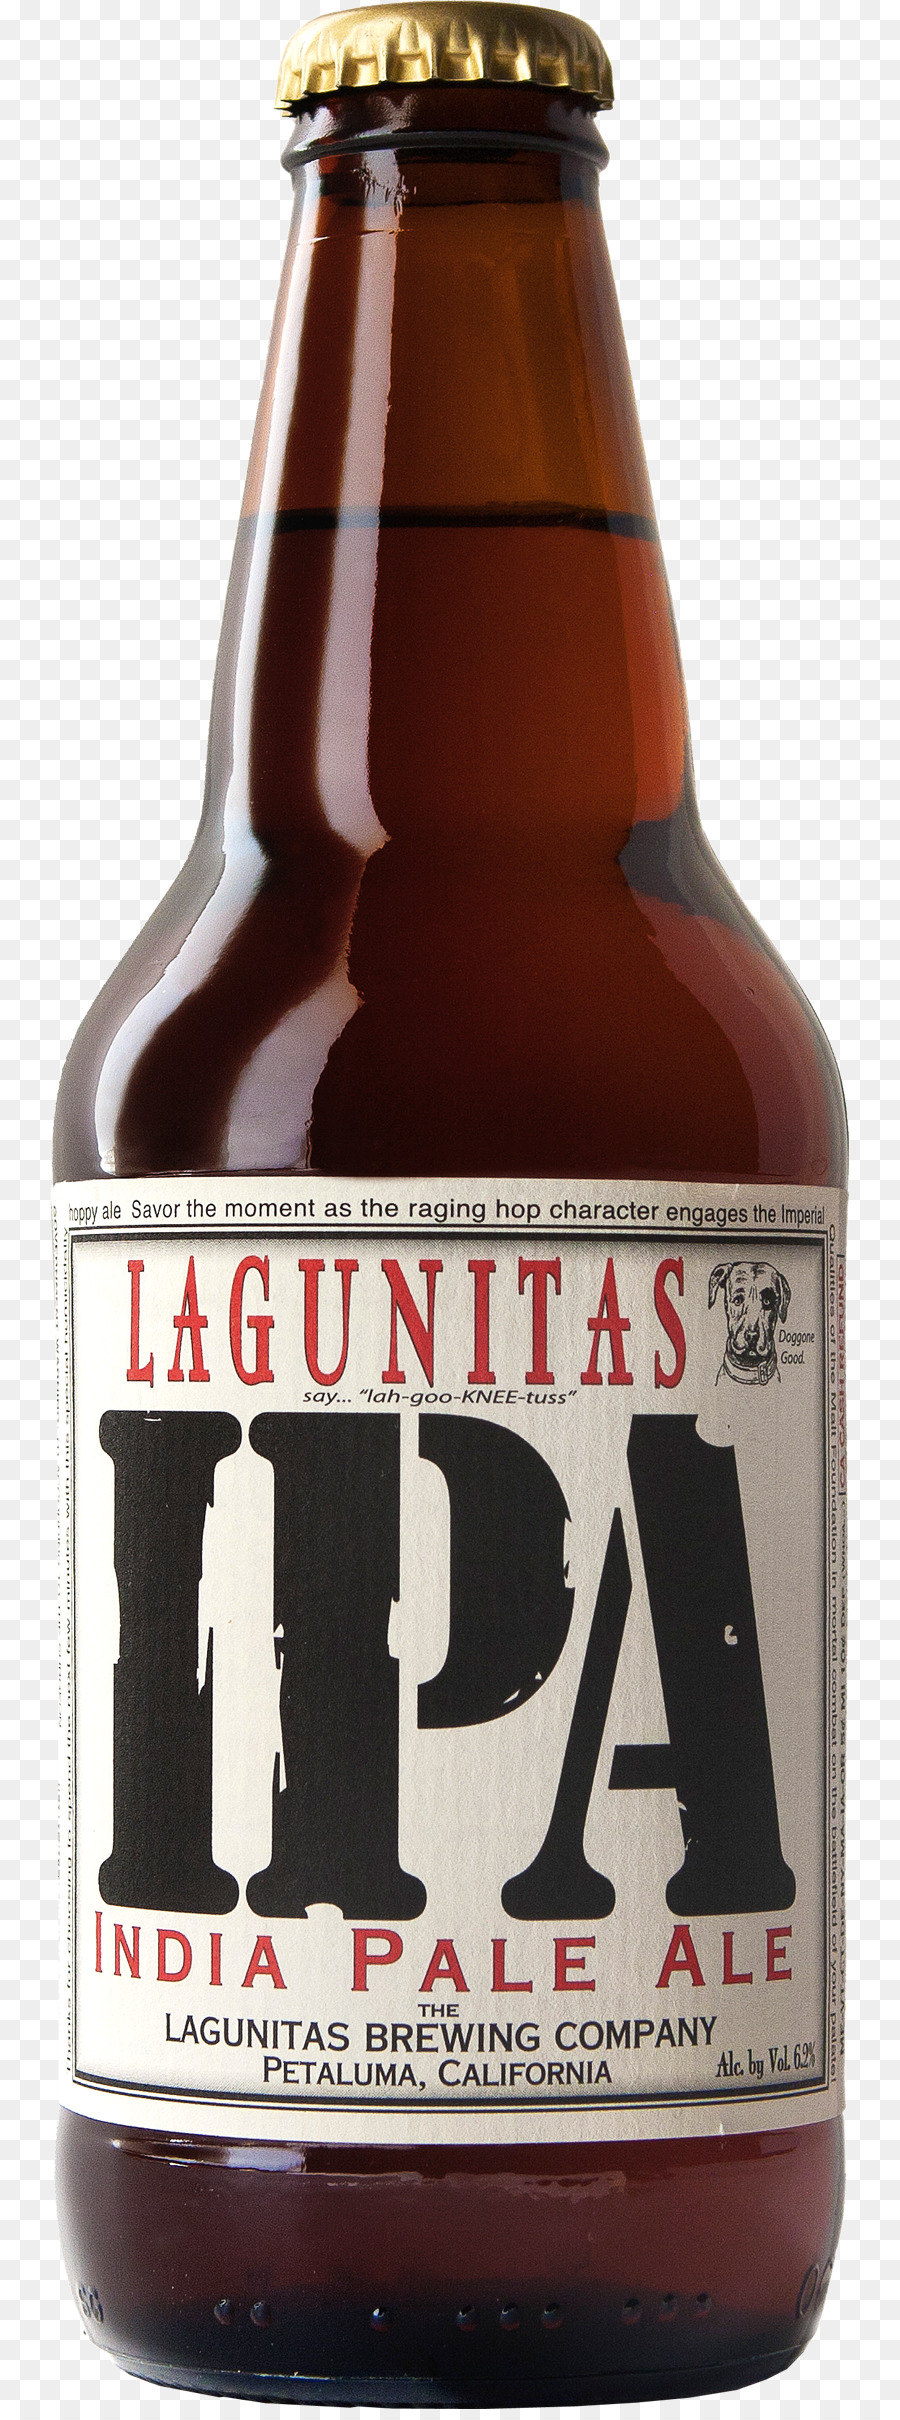 Lagunitas شركة تخمير，الهند بالي البيرة PNG